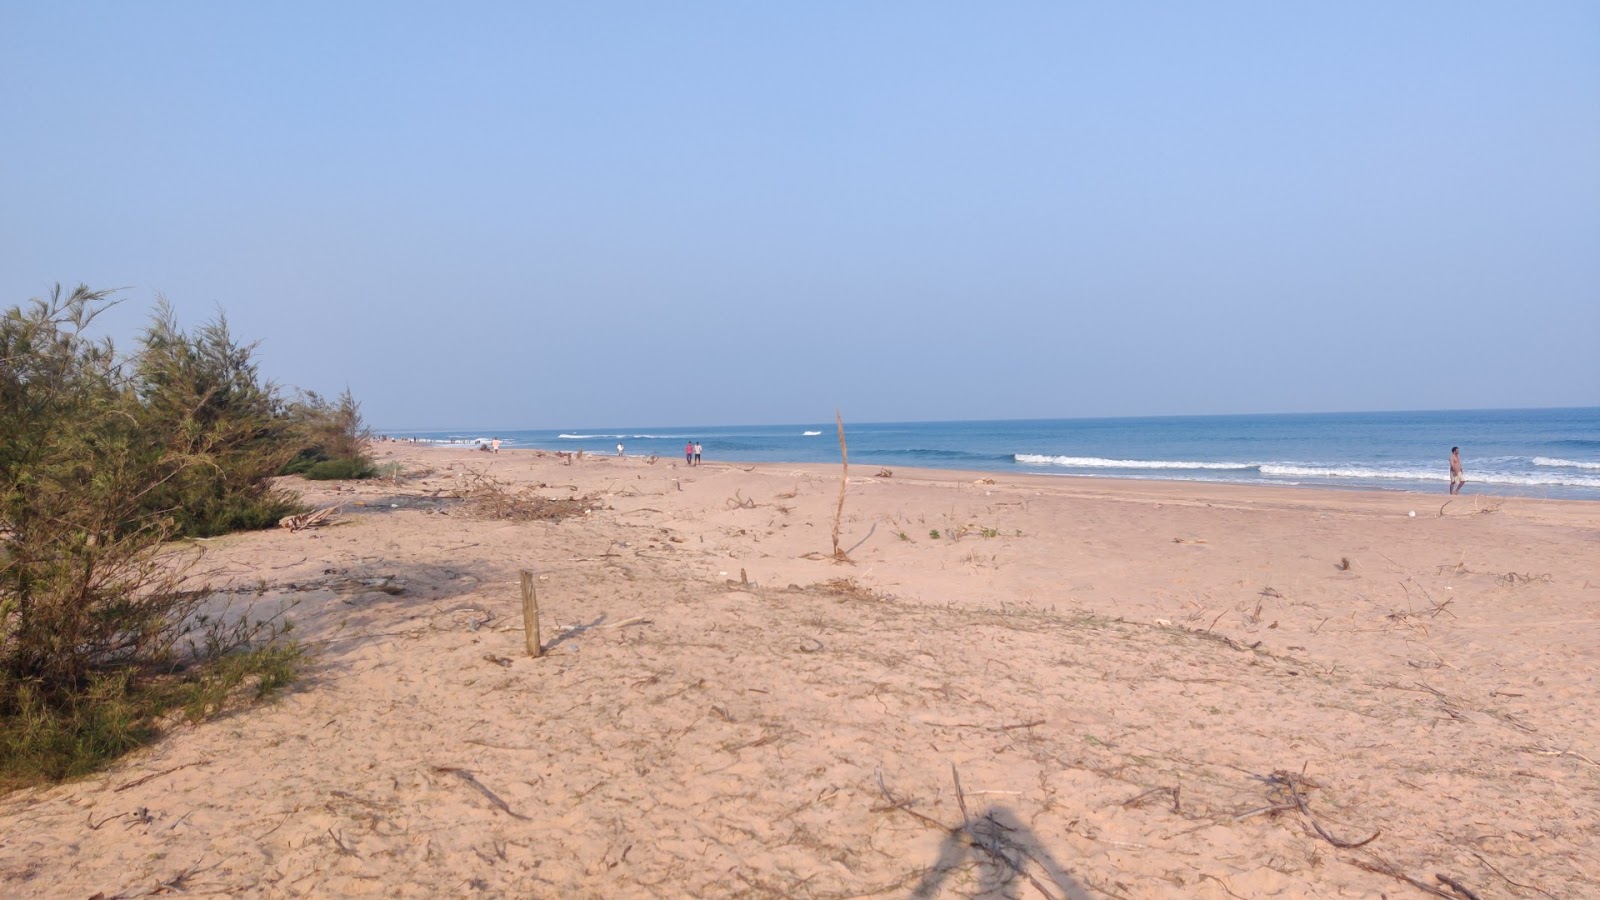 Foto di Rajaram Puram Beach con una superficie del sabbia luminosa